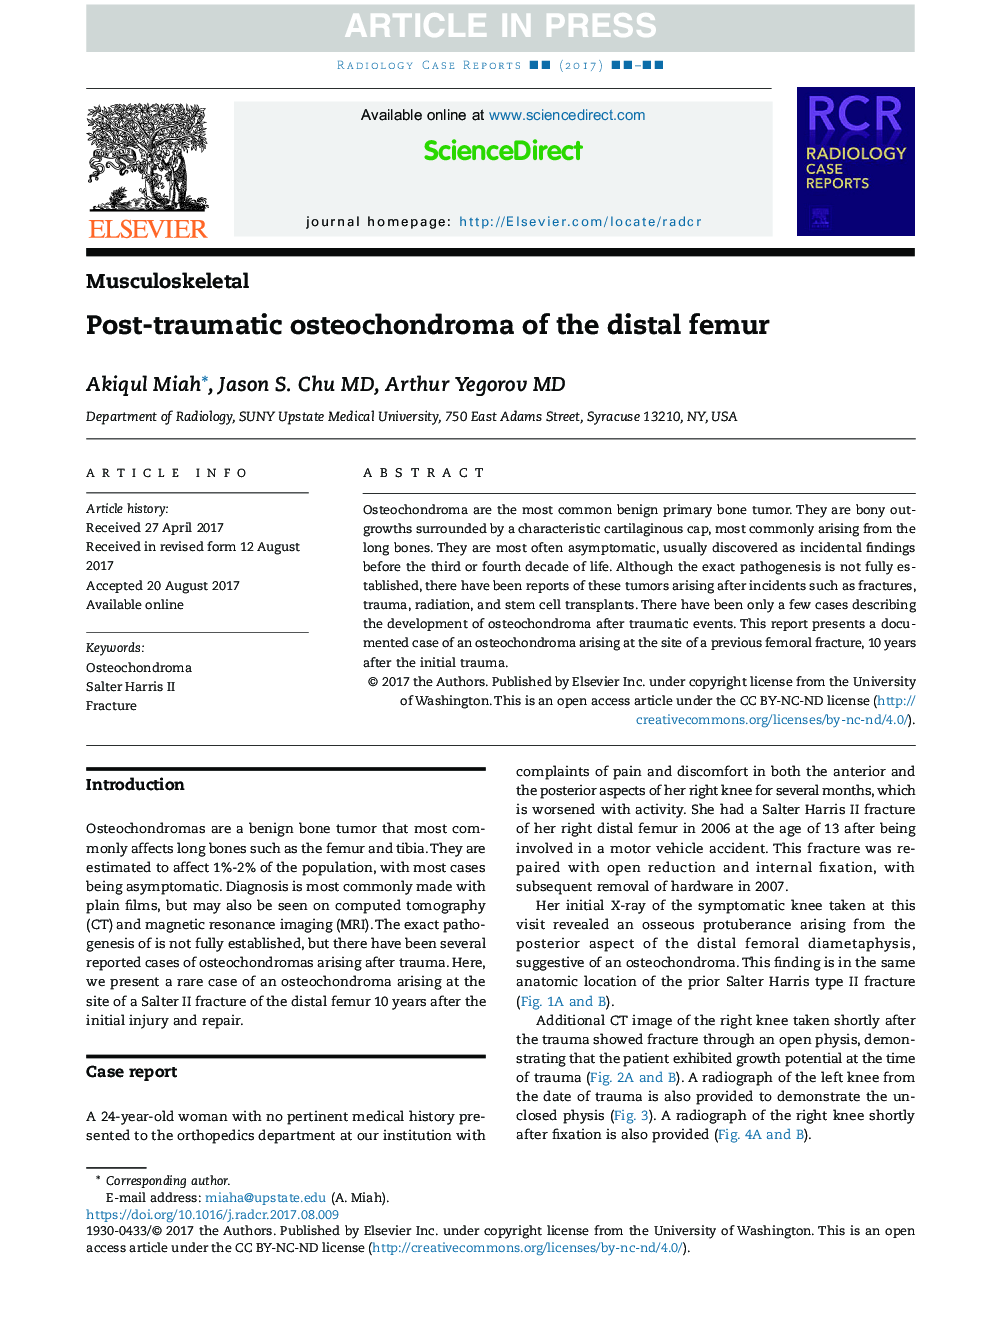 Post-traumatic osteochondroma of the distal femur